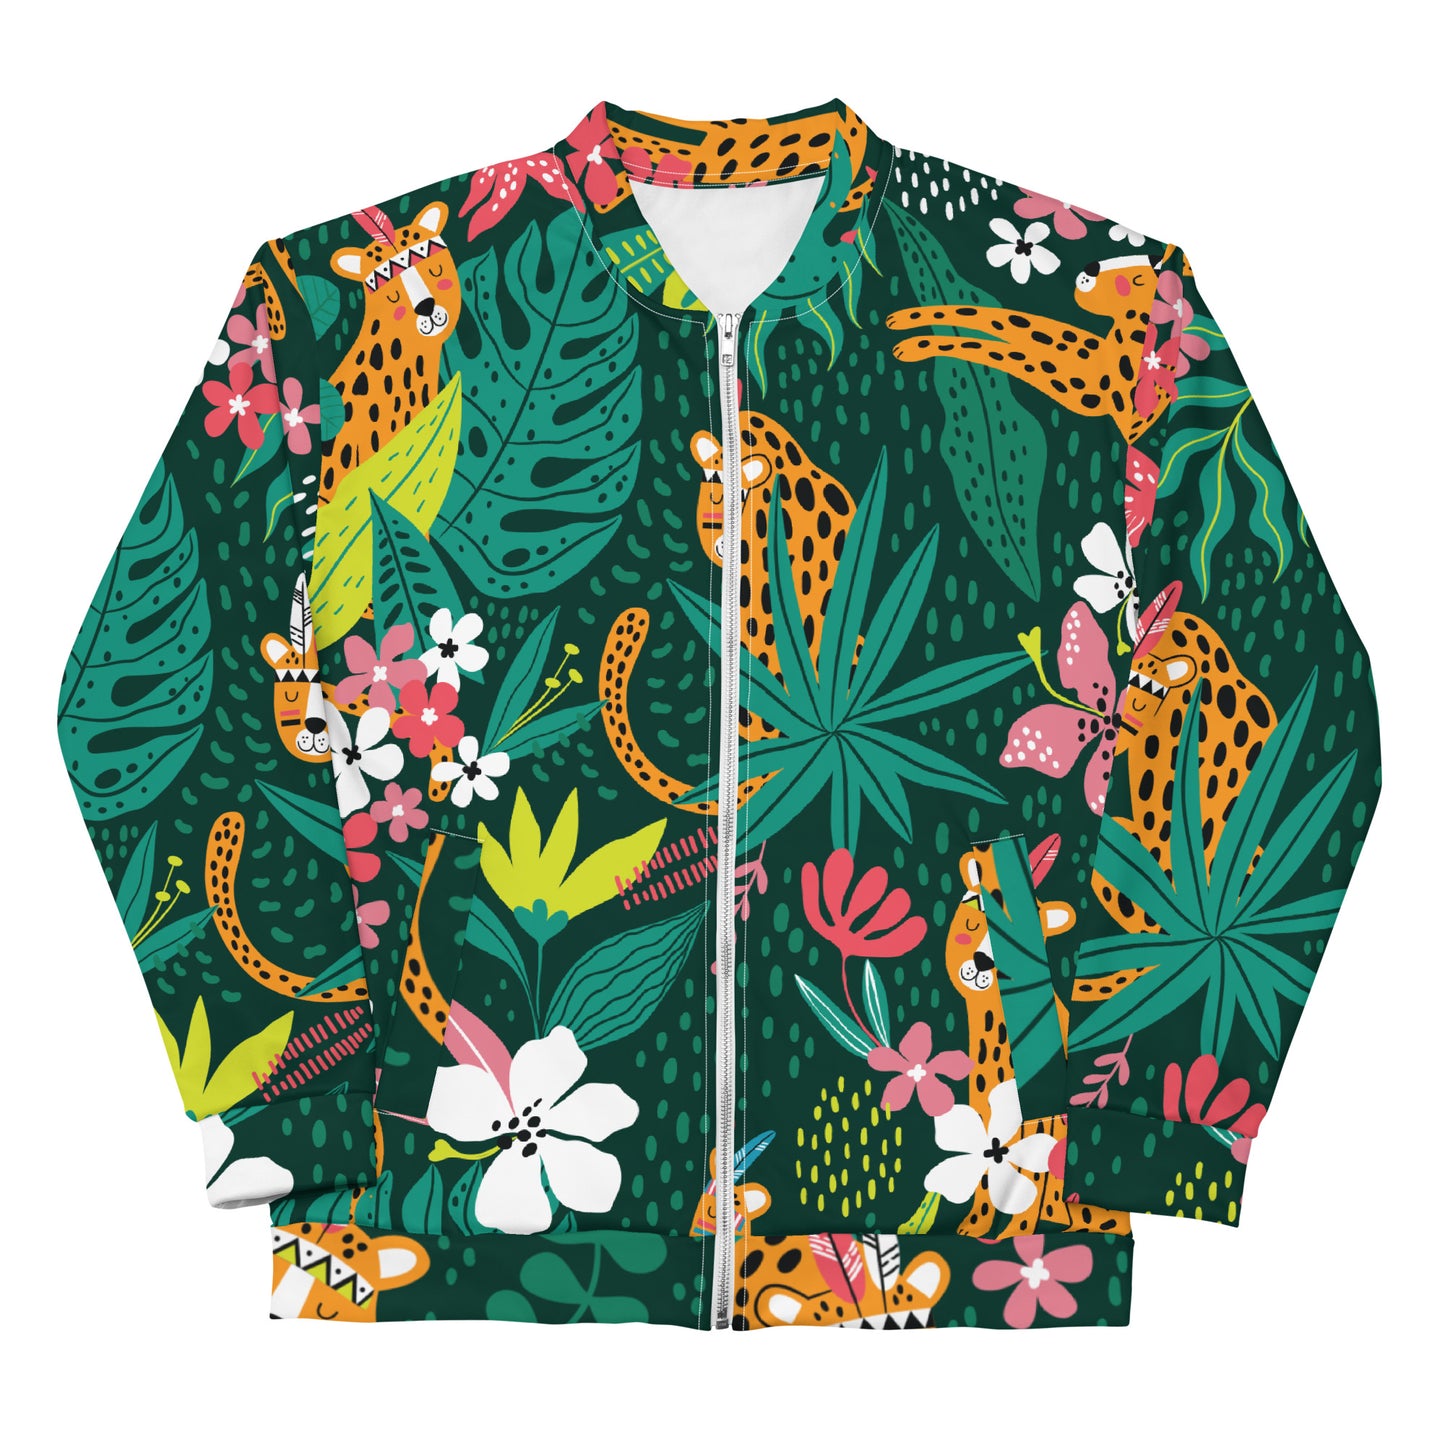 Jungle Party - Sustainably Made Jacket